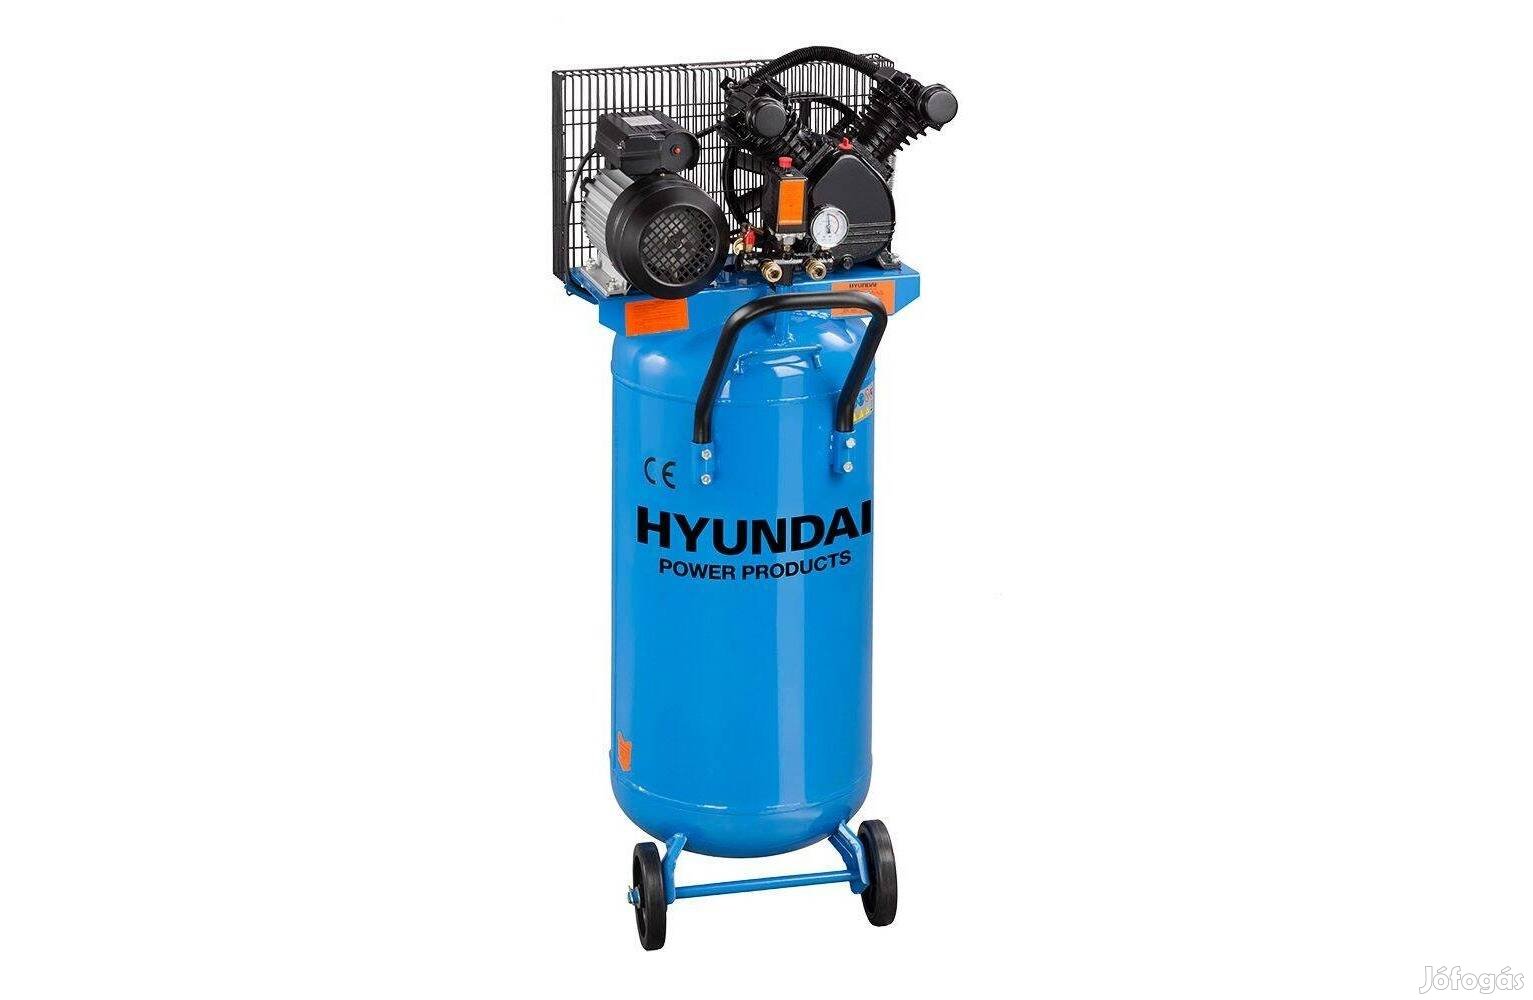 Hyundai Hyd-100LA/V2 Álló olajos kompresszor, 240V/2200W, 8 bar